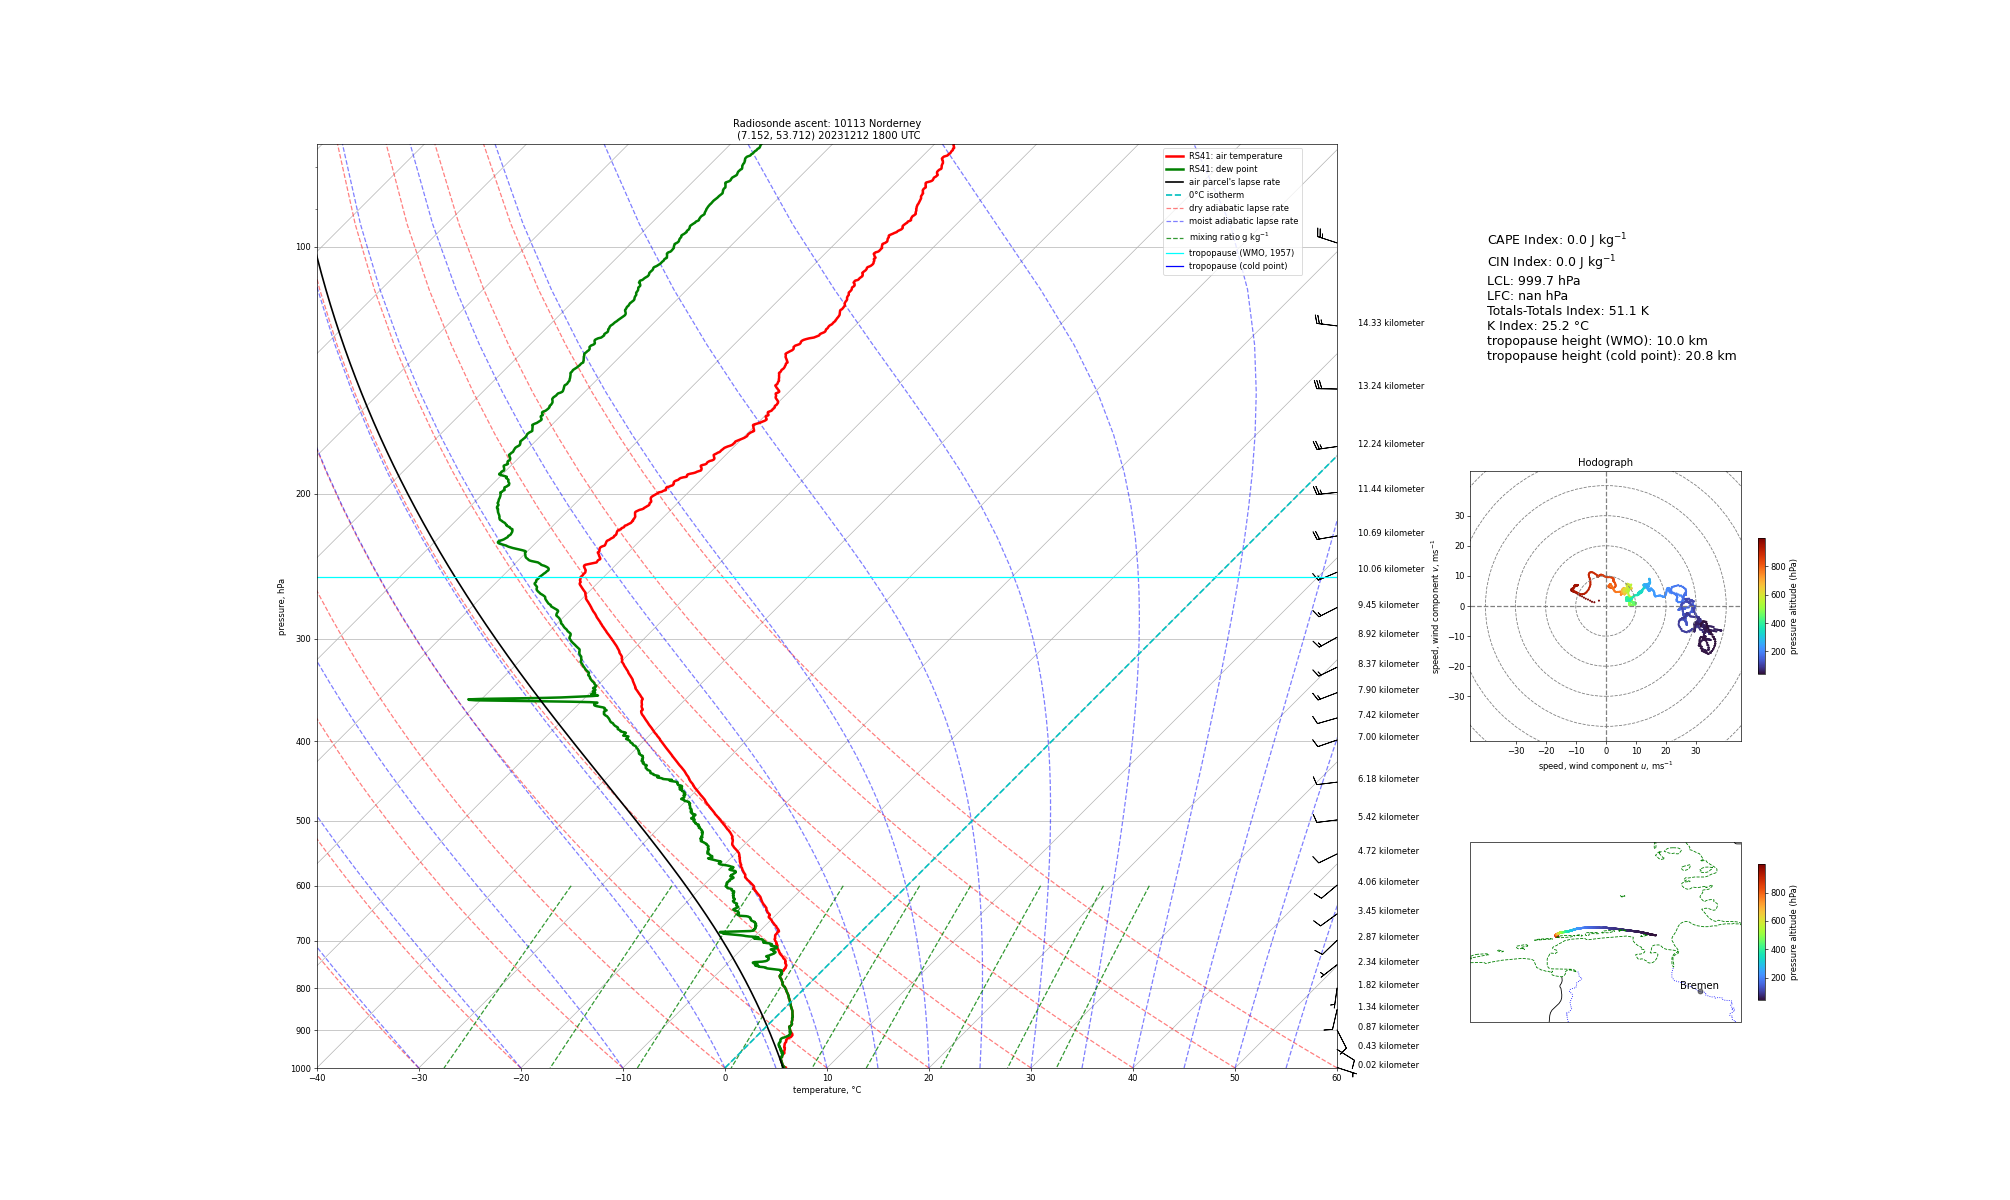 Visualisation of the radiosounding profile at Norderney at 1800 UTC